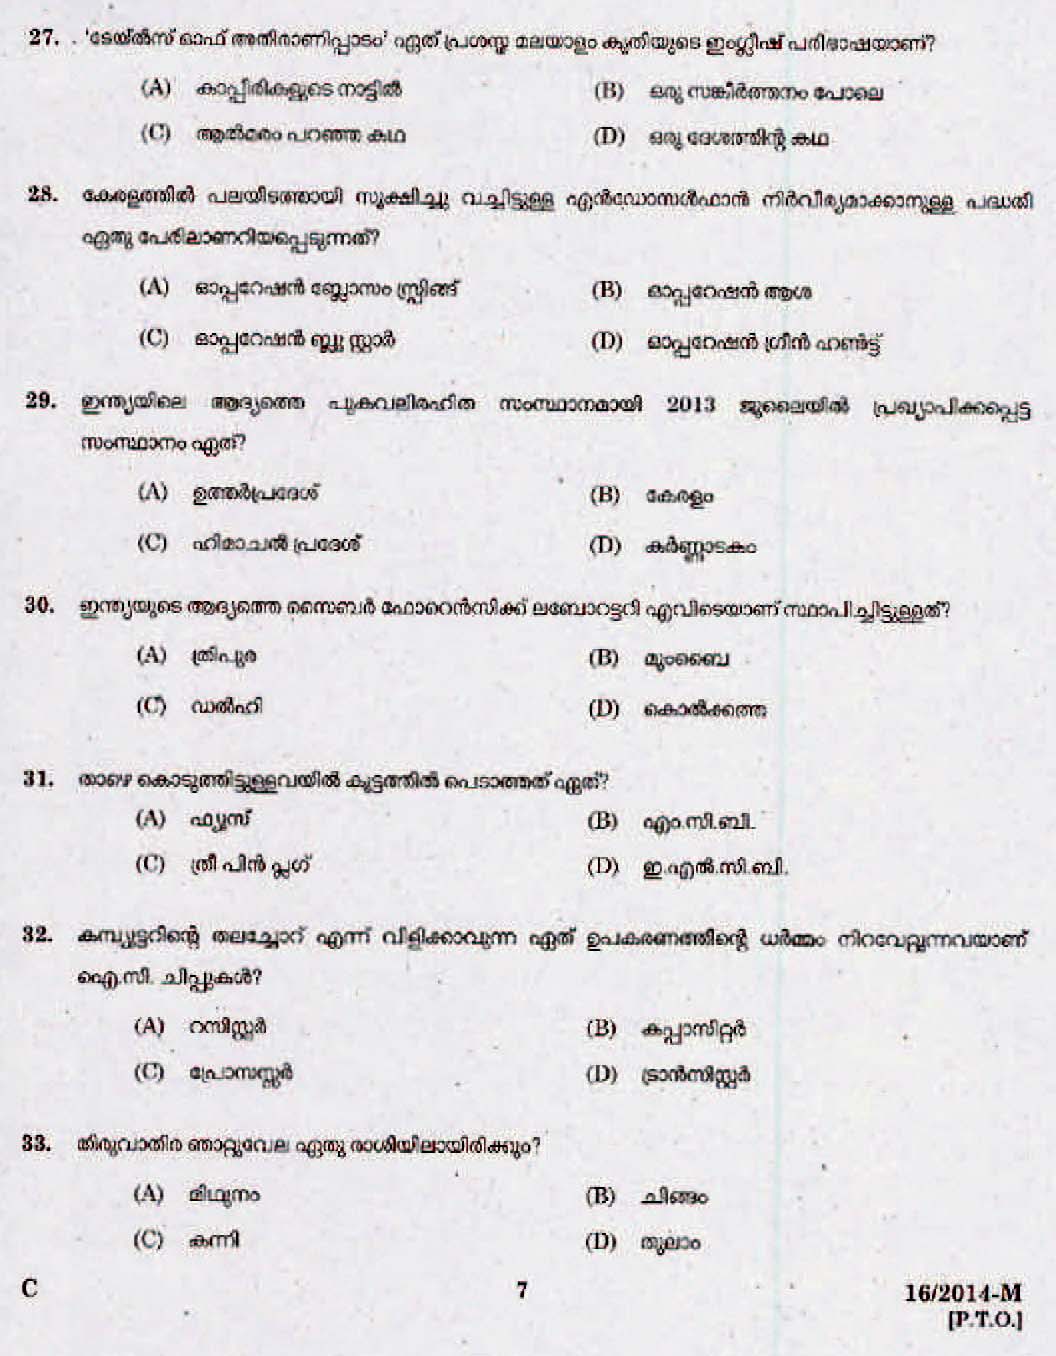 LD Clerk Kottayam Question Paper Malayalam 2014 Paper Code 162014 M 6